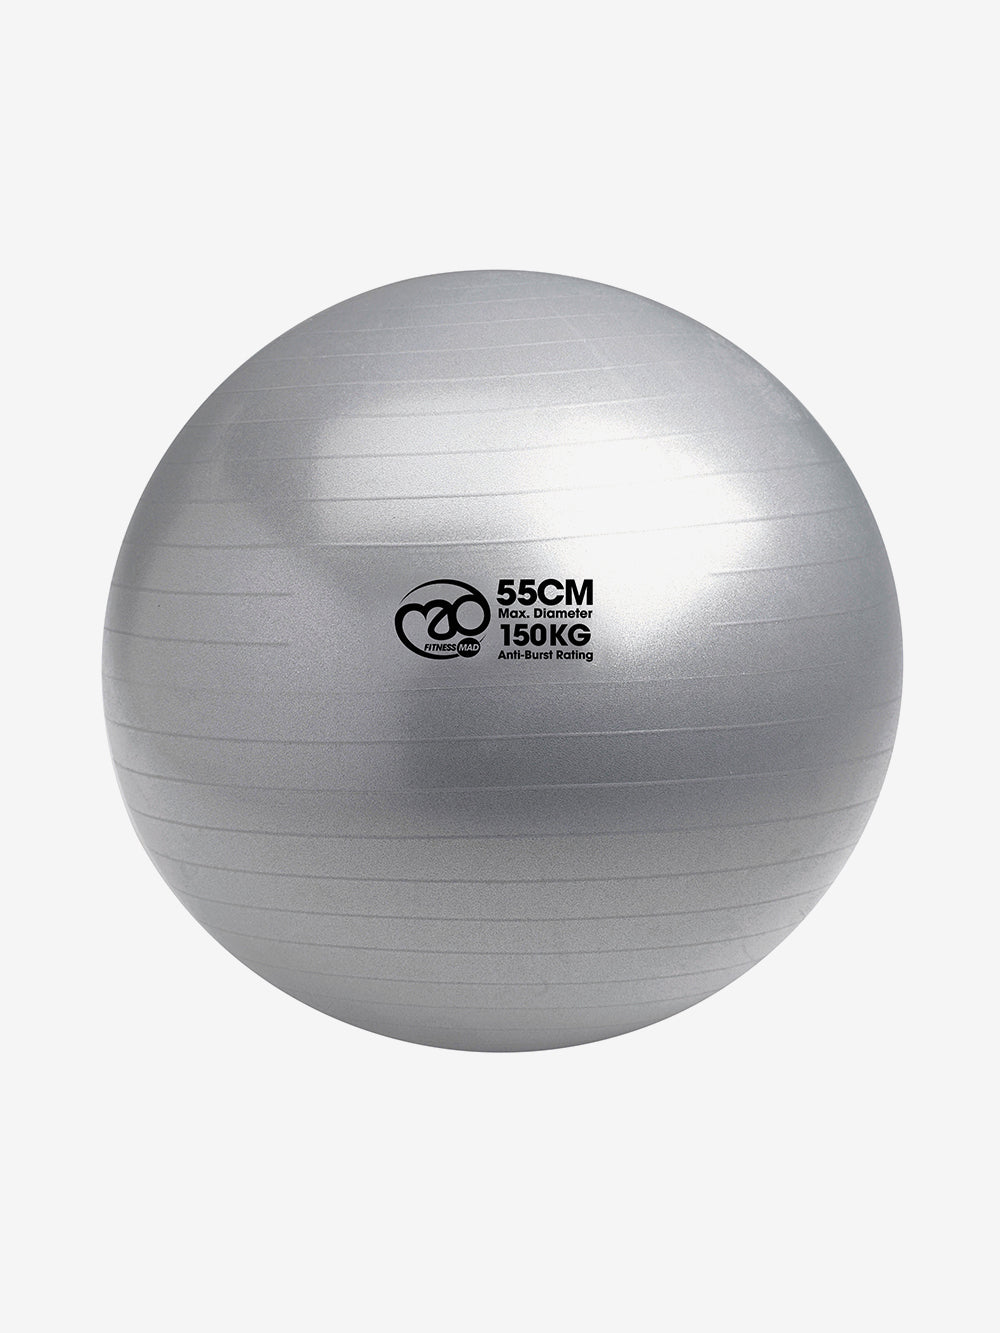 Yoga-Mad 150kg Anti-Burst Swiss Ball including pump - 55cm